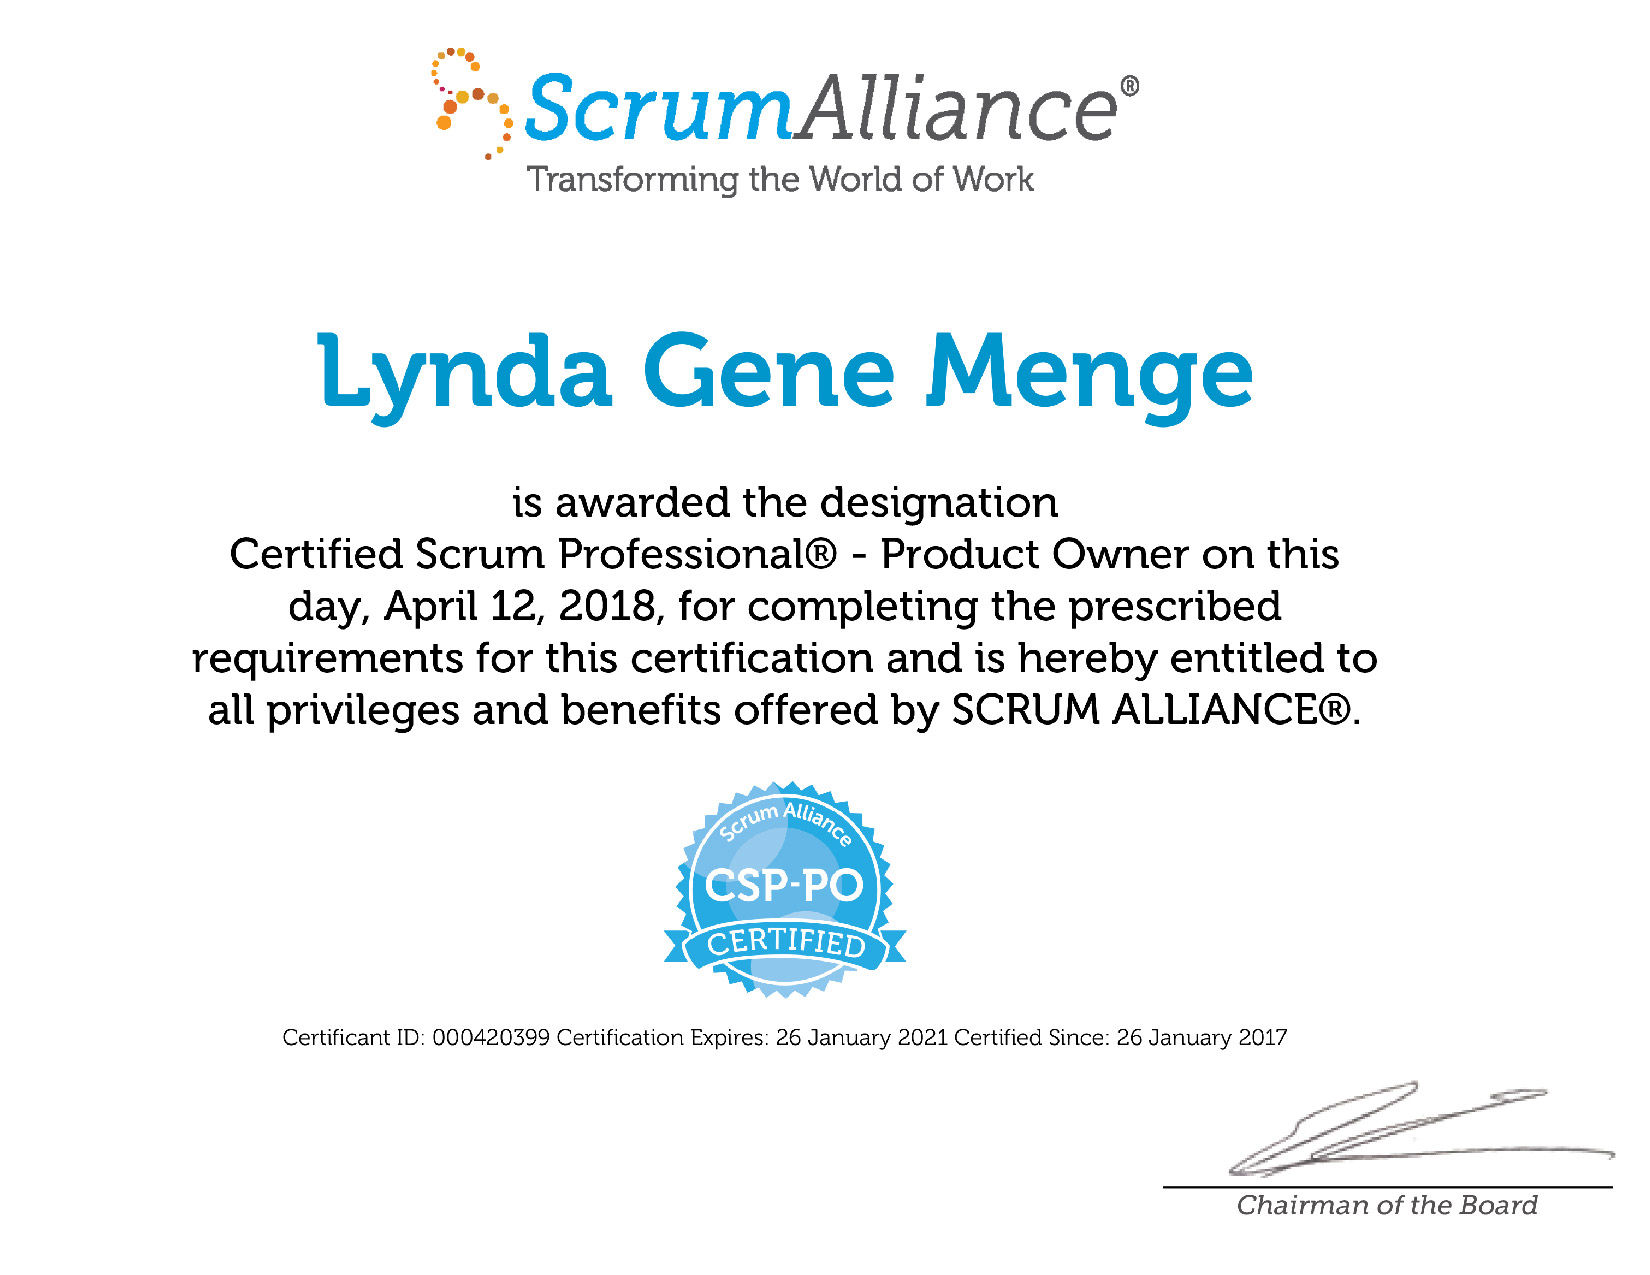 Certified Scrum Professional Product Owner - Lynda Menge